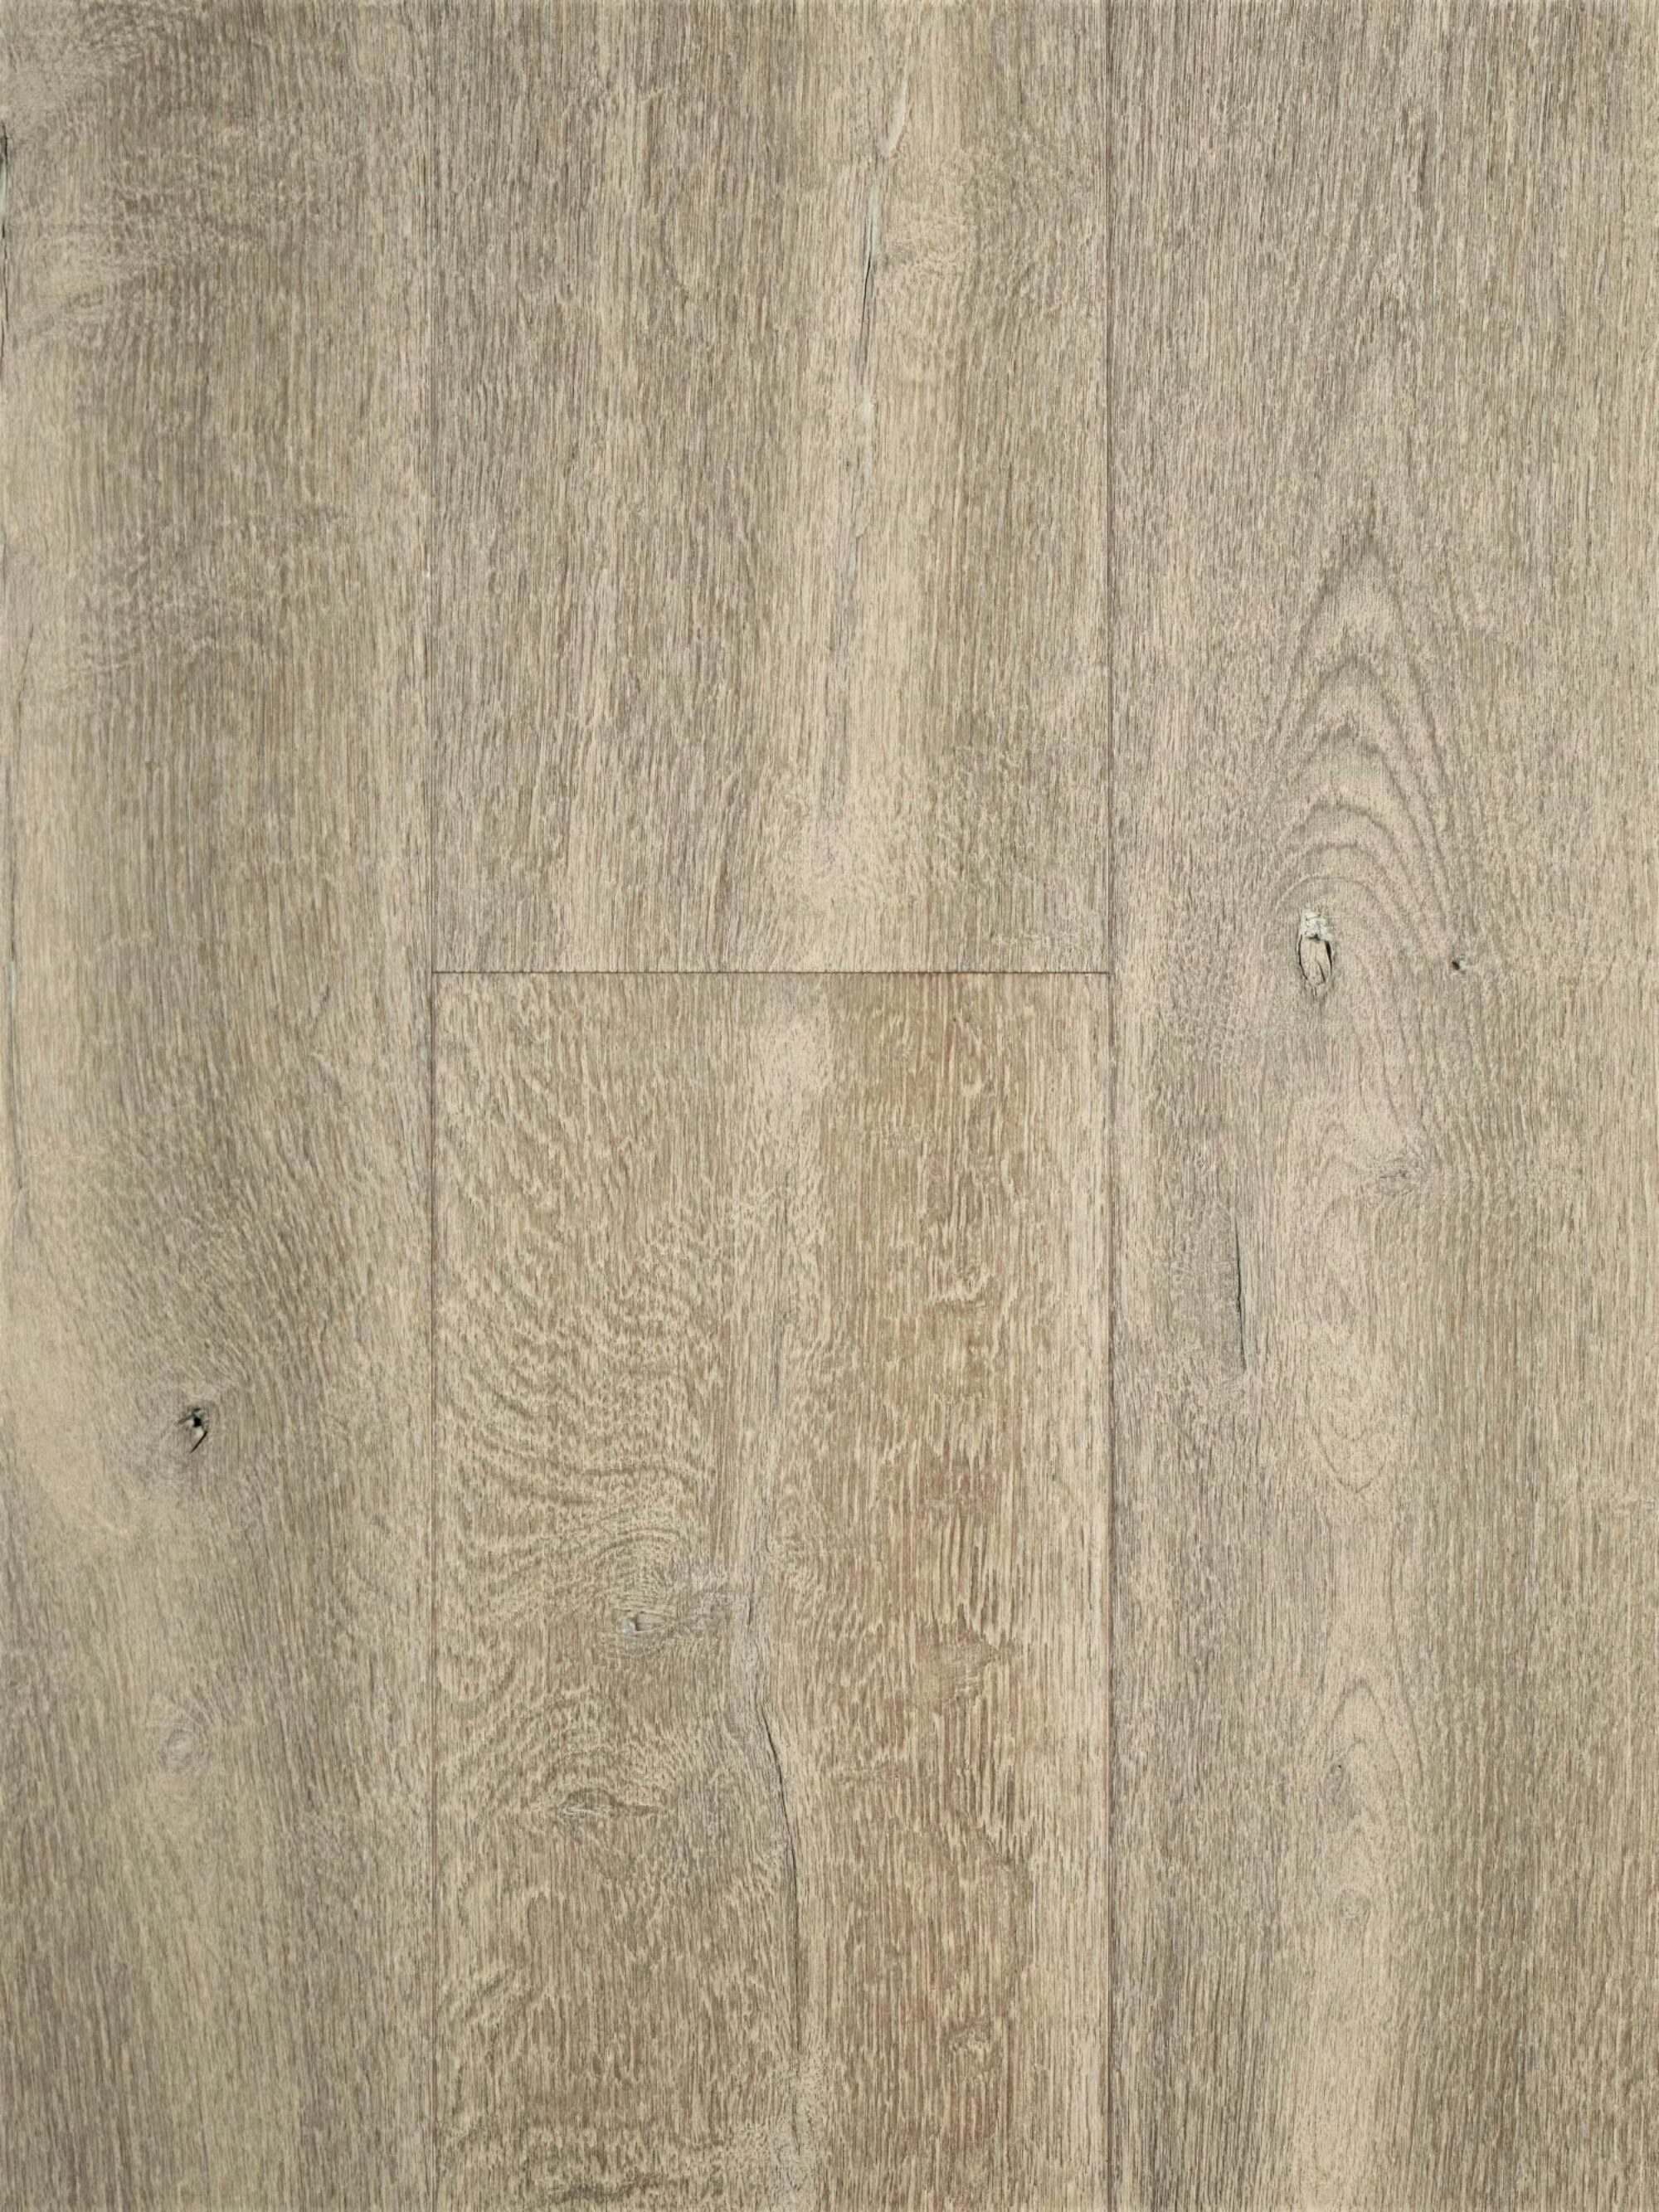 london barbican grey oak flooring